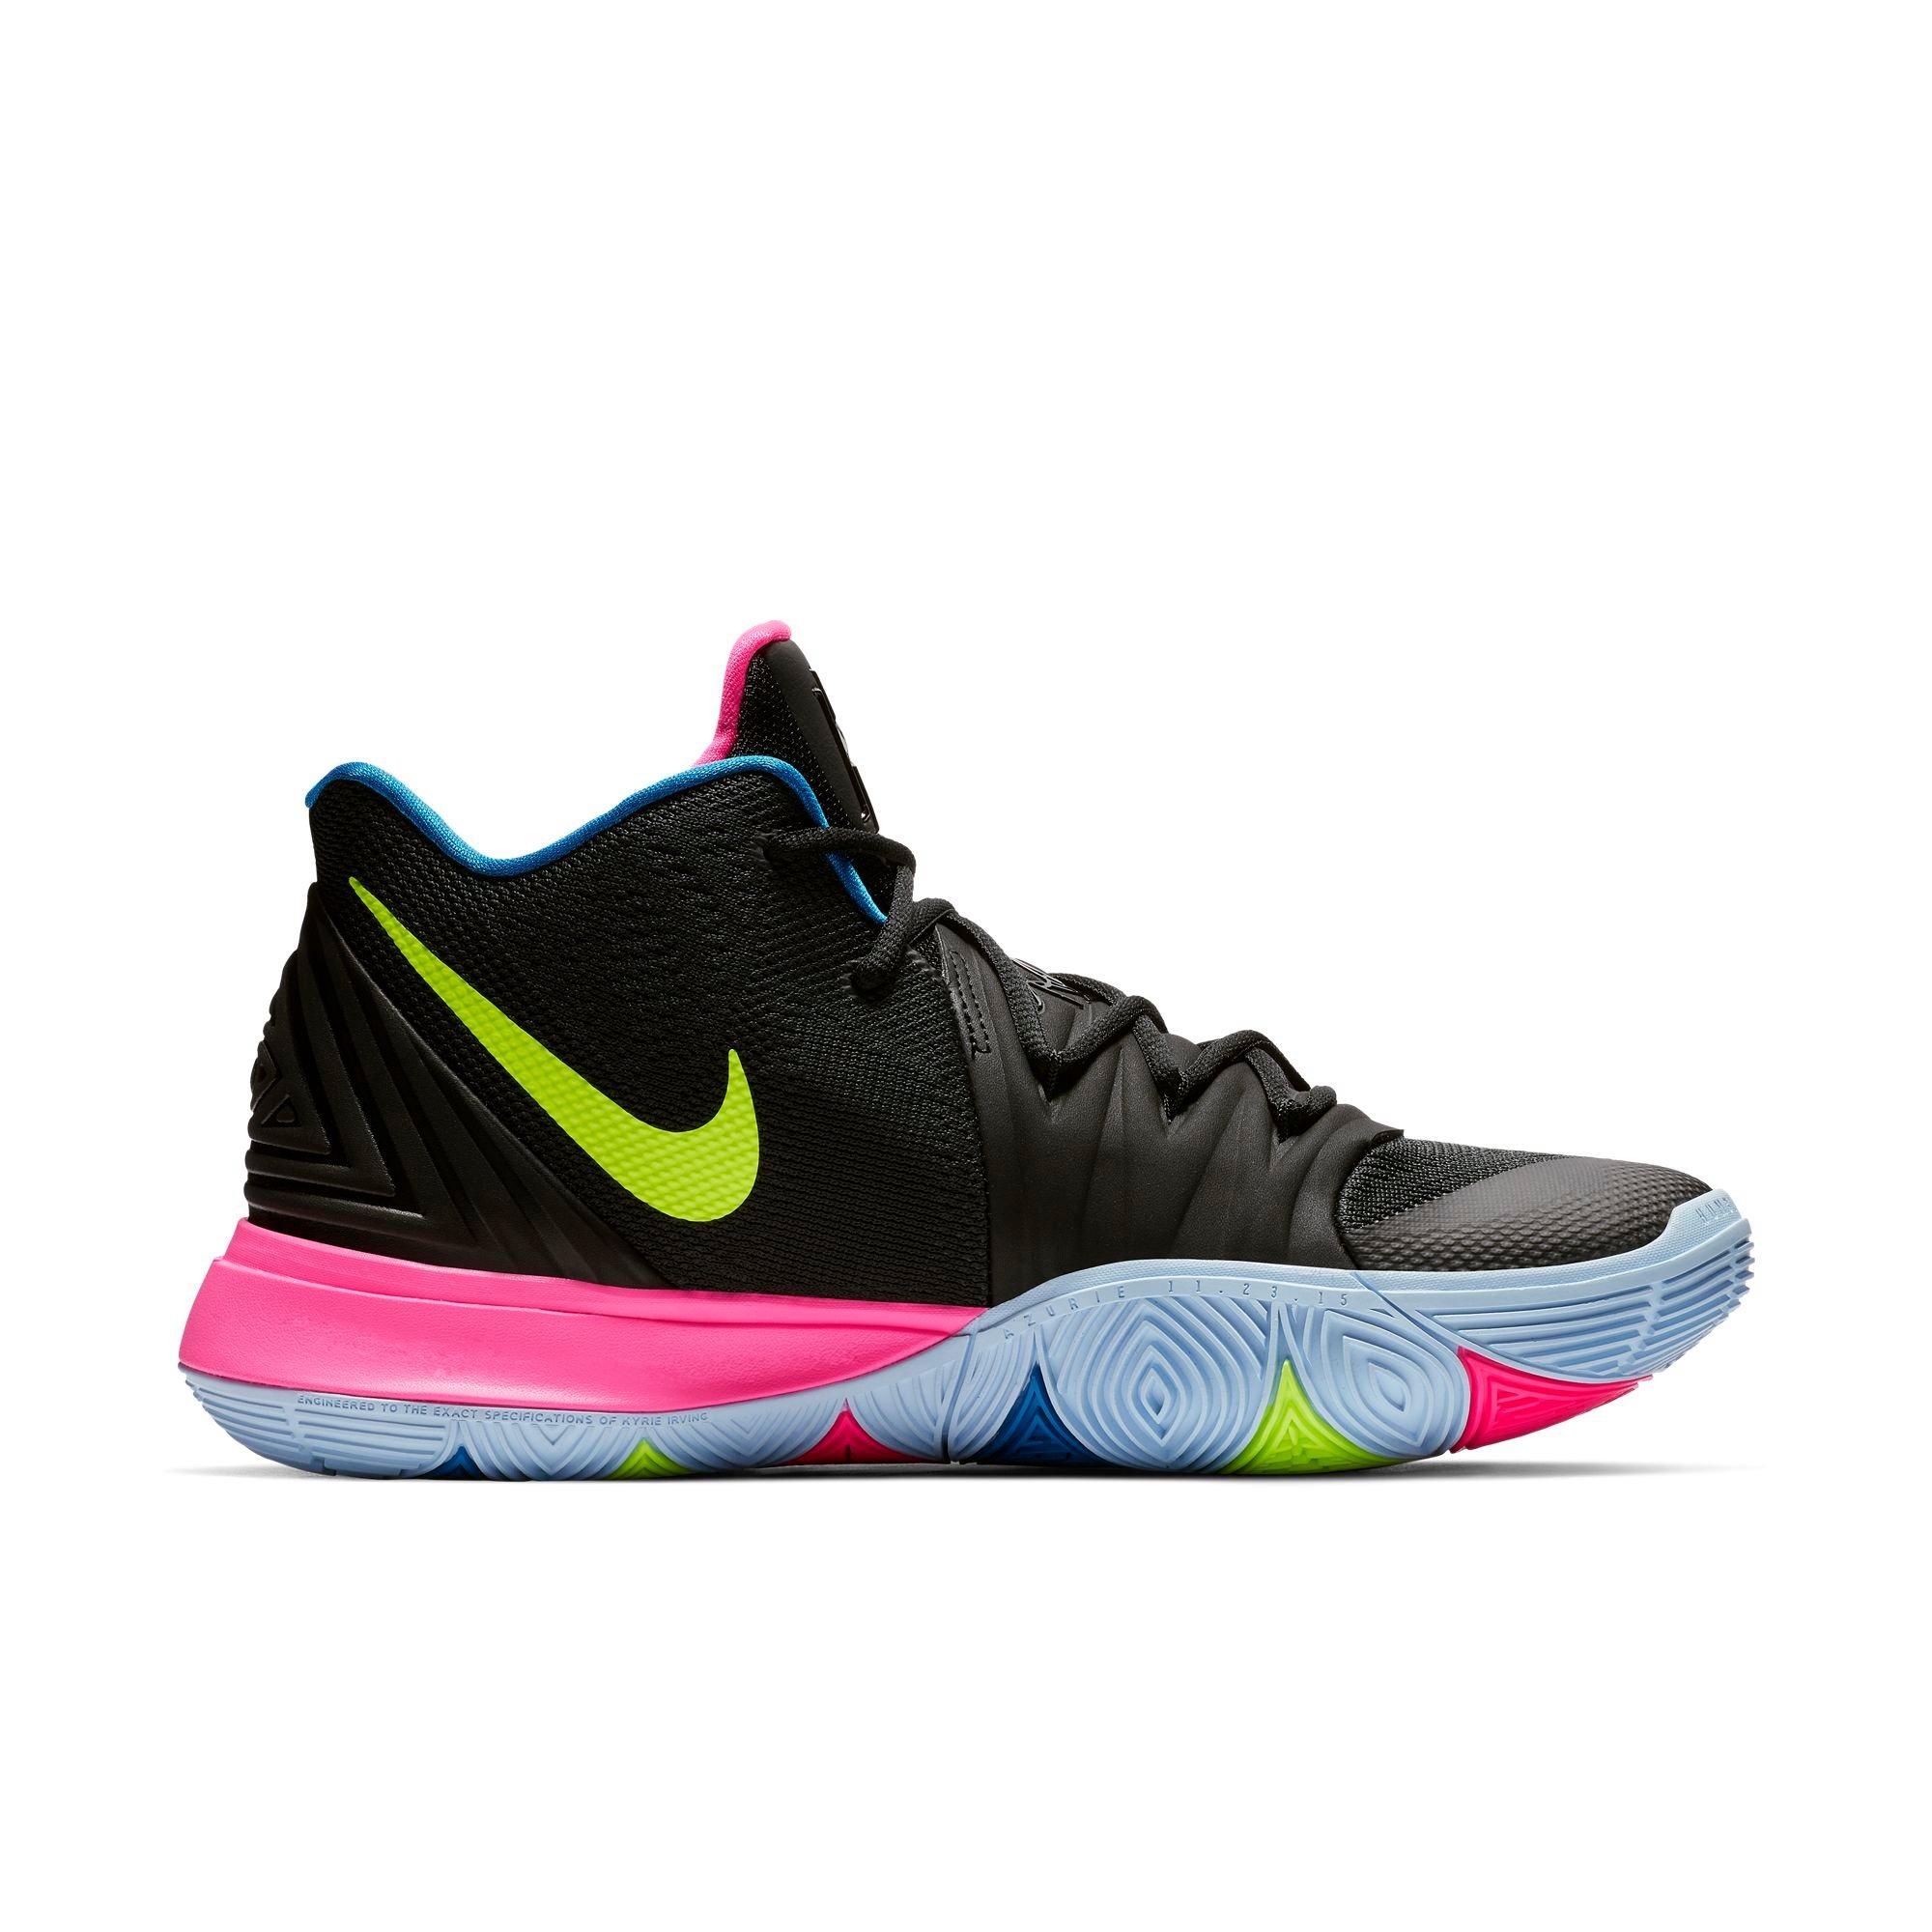 Nike Kyrie 5 Bandulu Ep Sneakers Ss20 Farfetch.Com